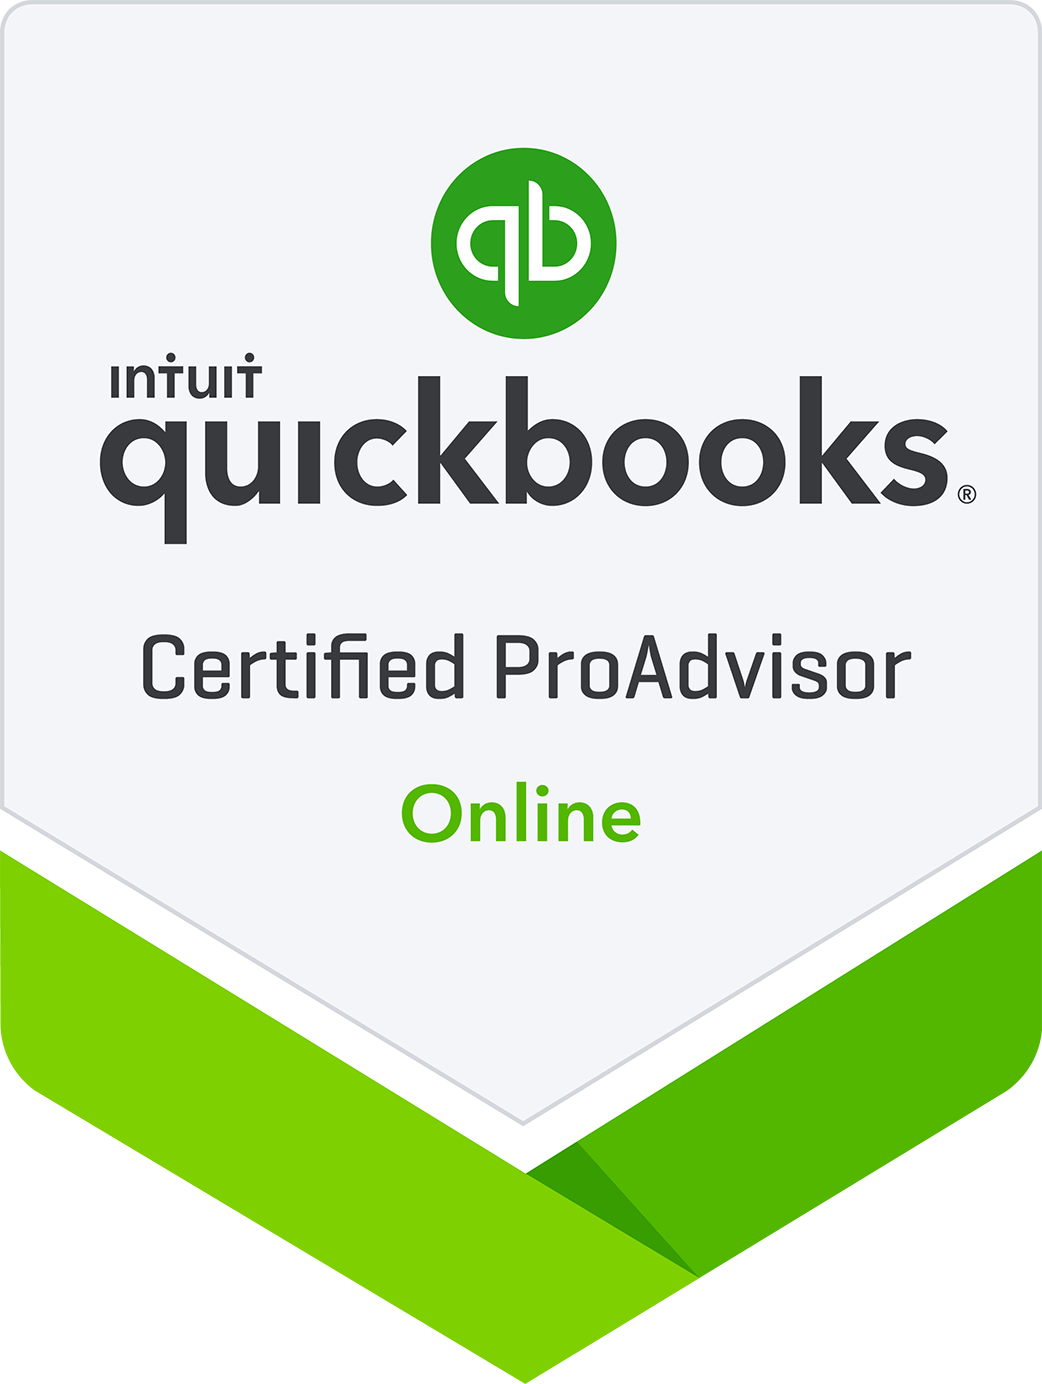 QuickBooks Online Proadvisor Certification, Ocala, FL, Celebration, FL, The Villages, FL and surrounding cities